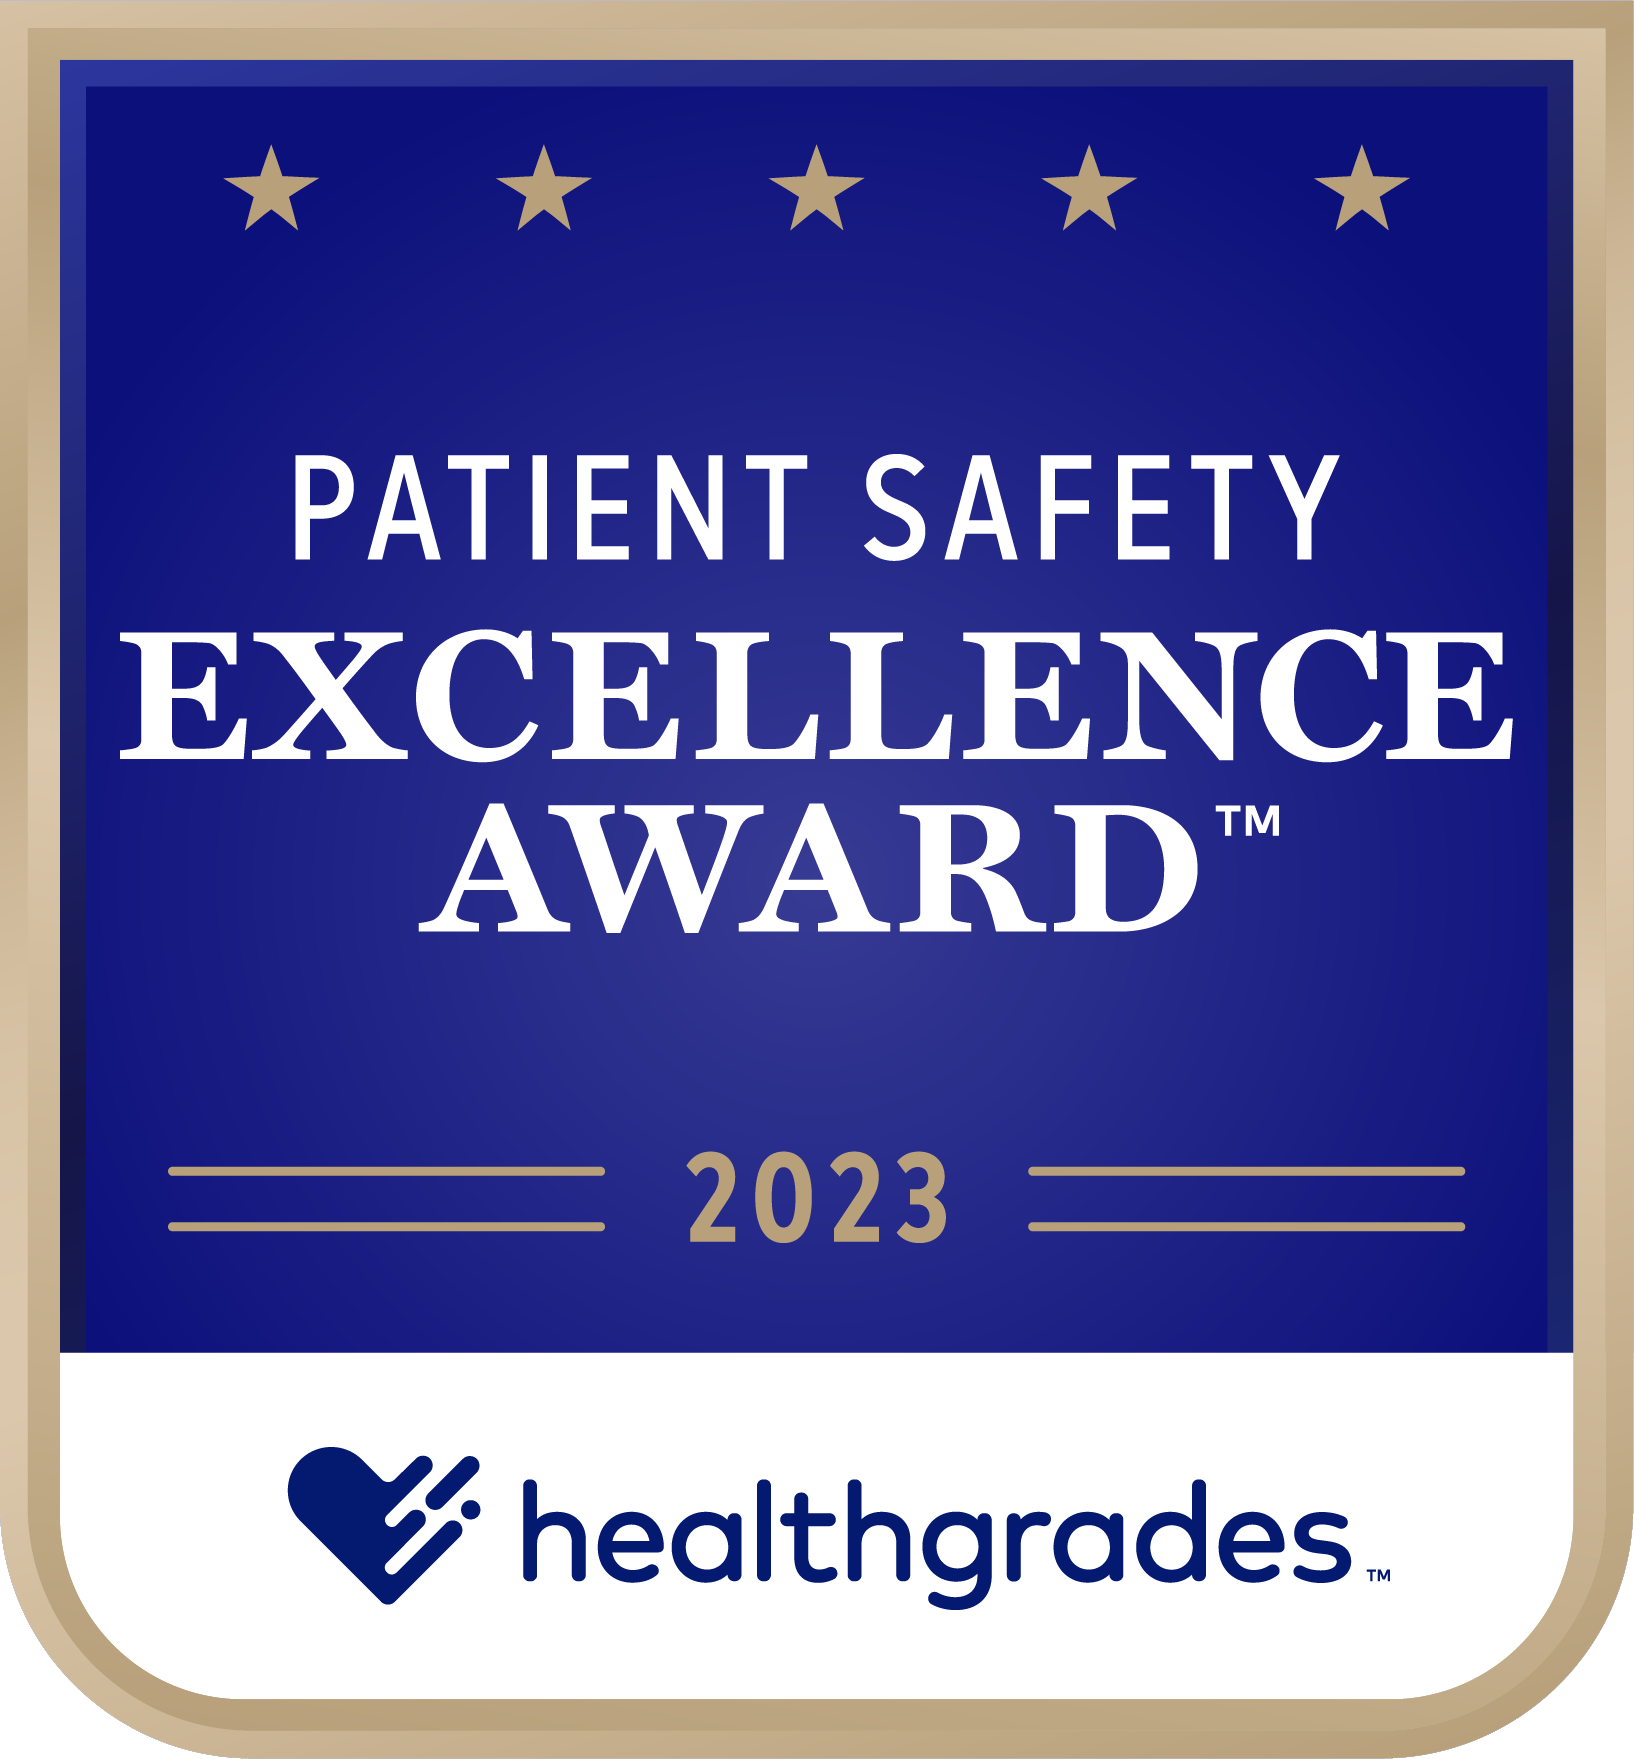 Healthrades Patient Safety Award 2023